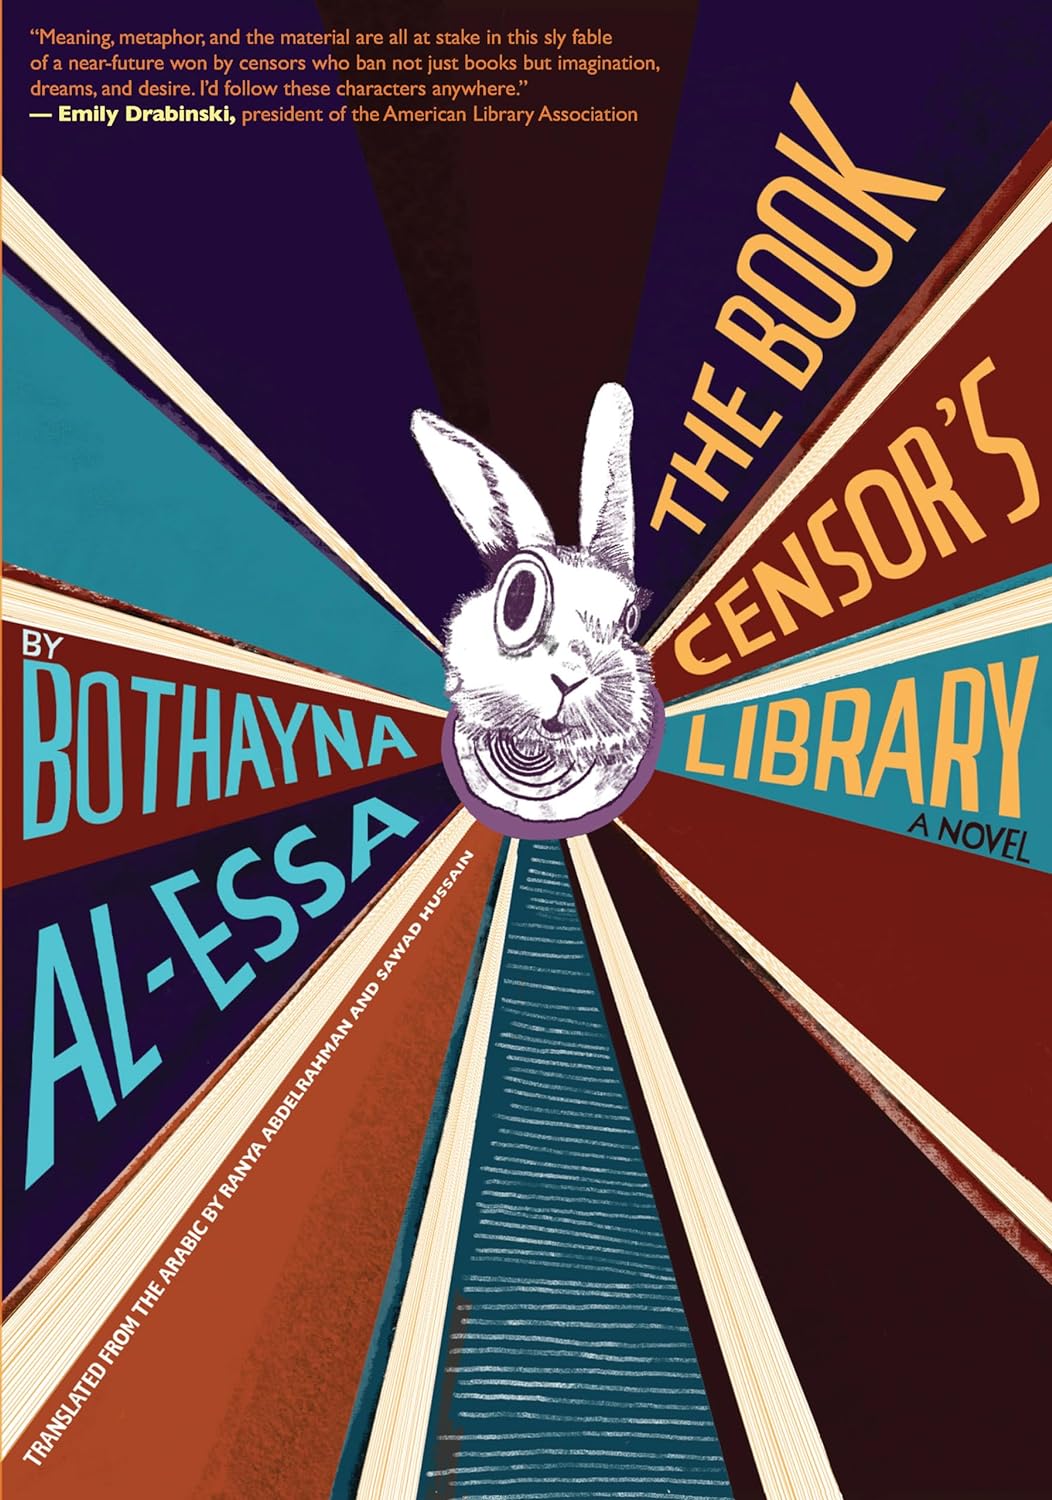 The Book Censor's Library -Bothayna Al-Essa - The Society for Unusual Books